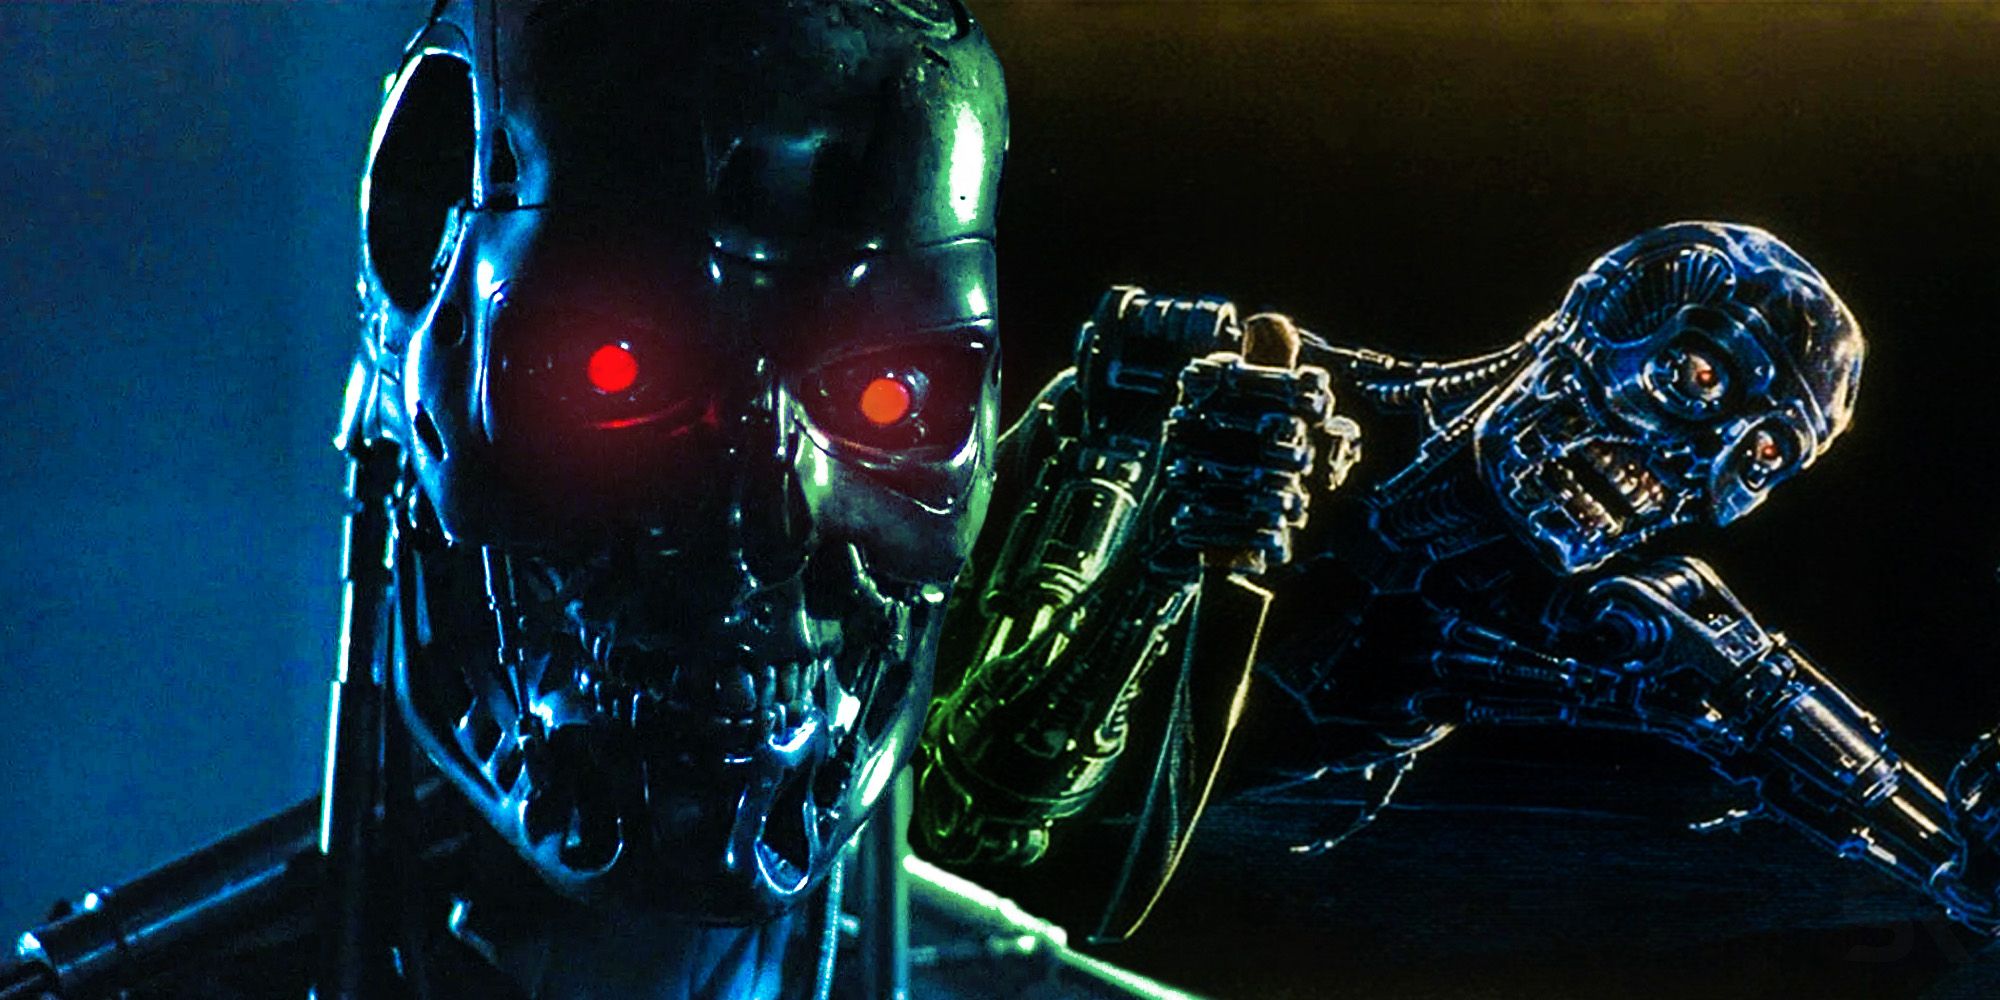 The cyborgs looking menacing in The Terminator